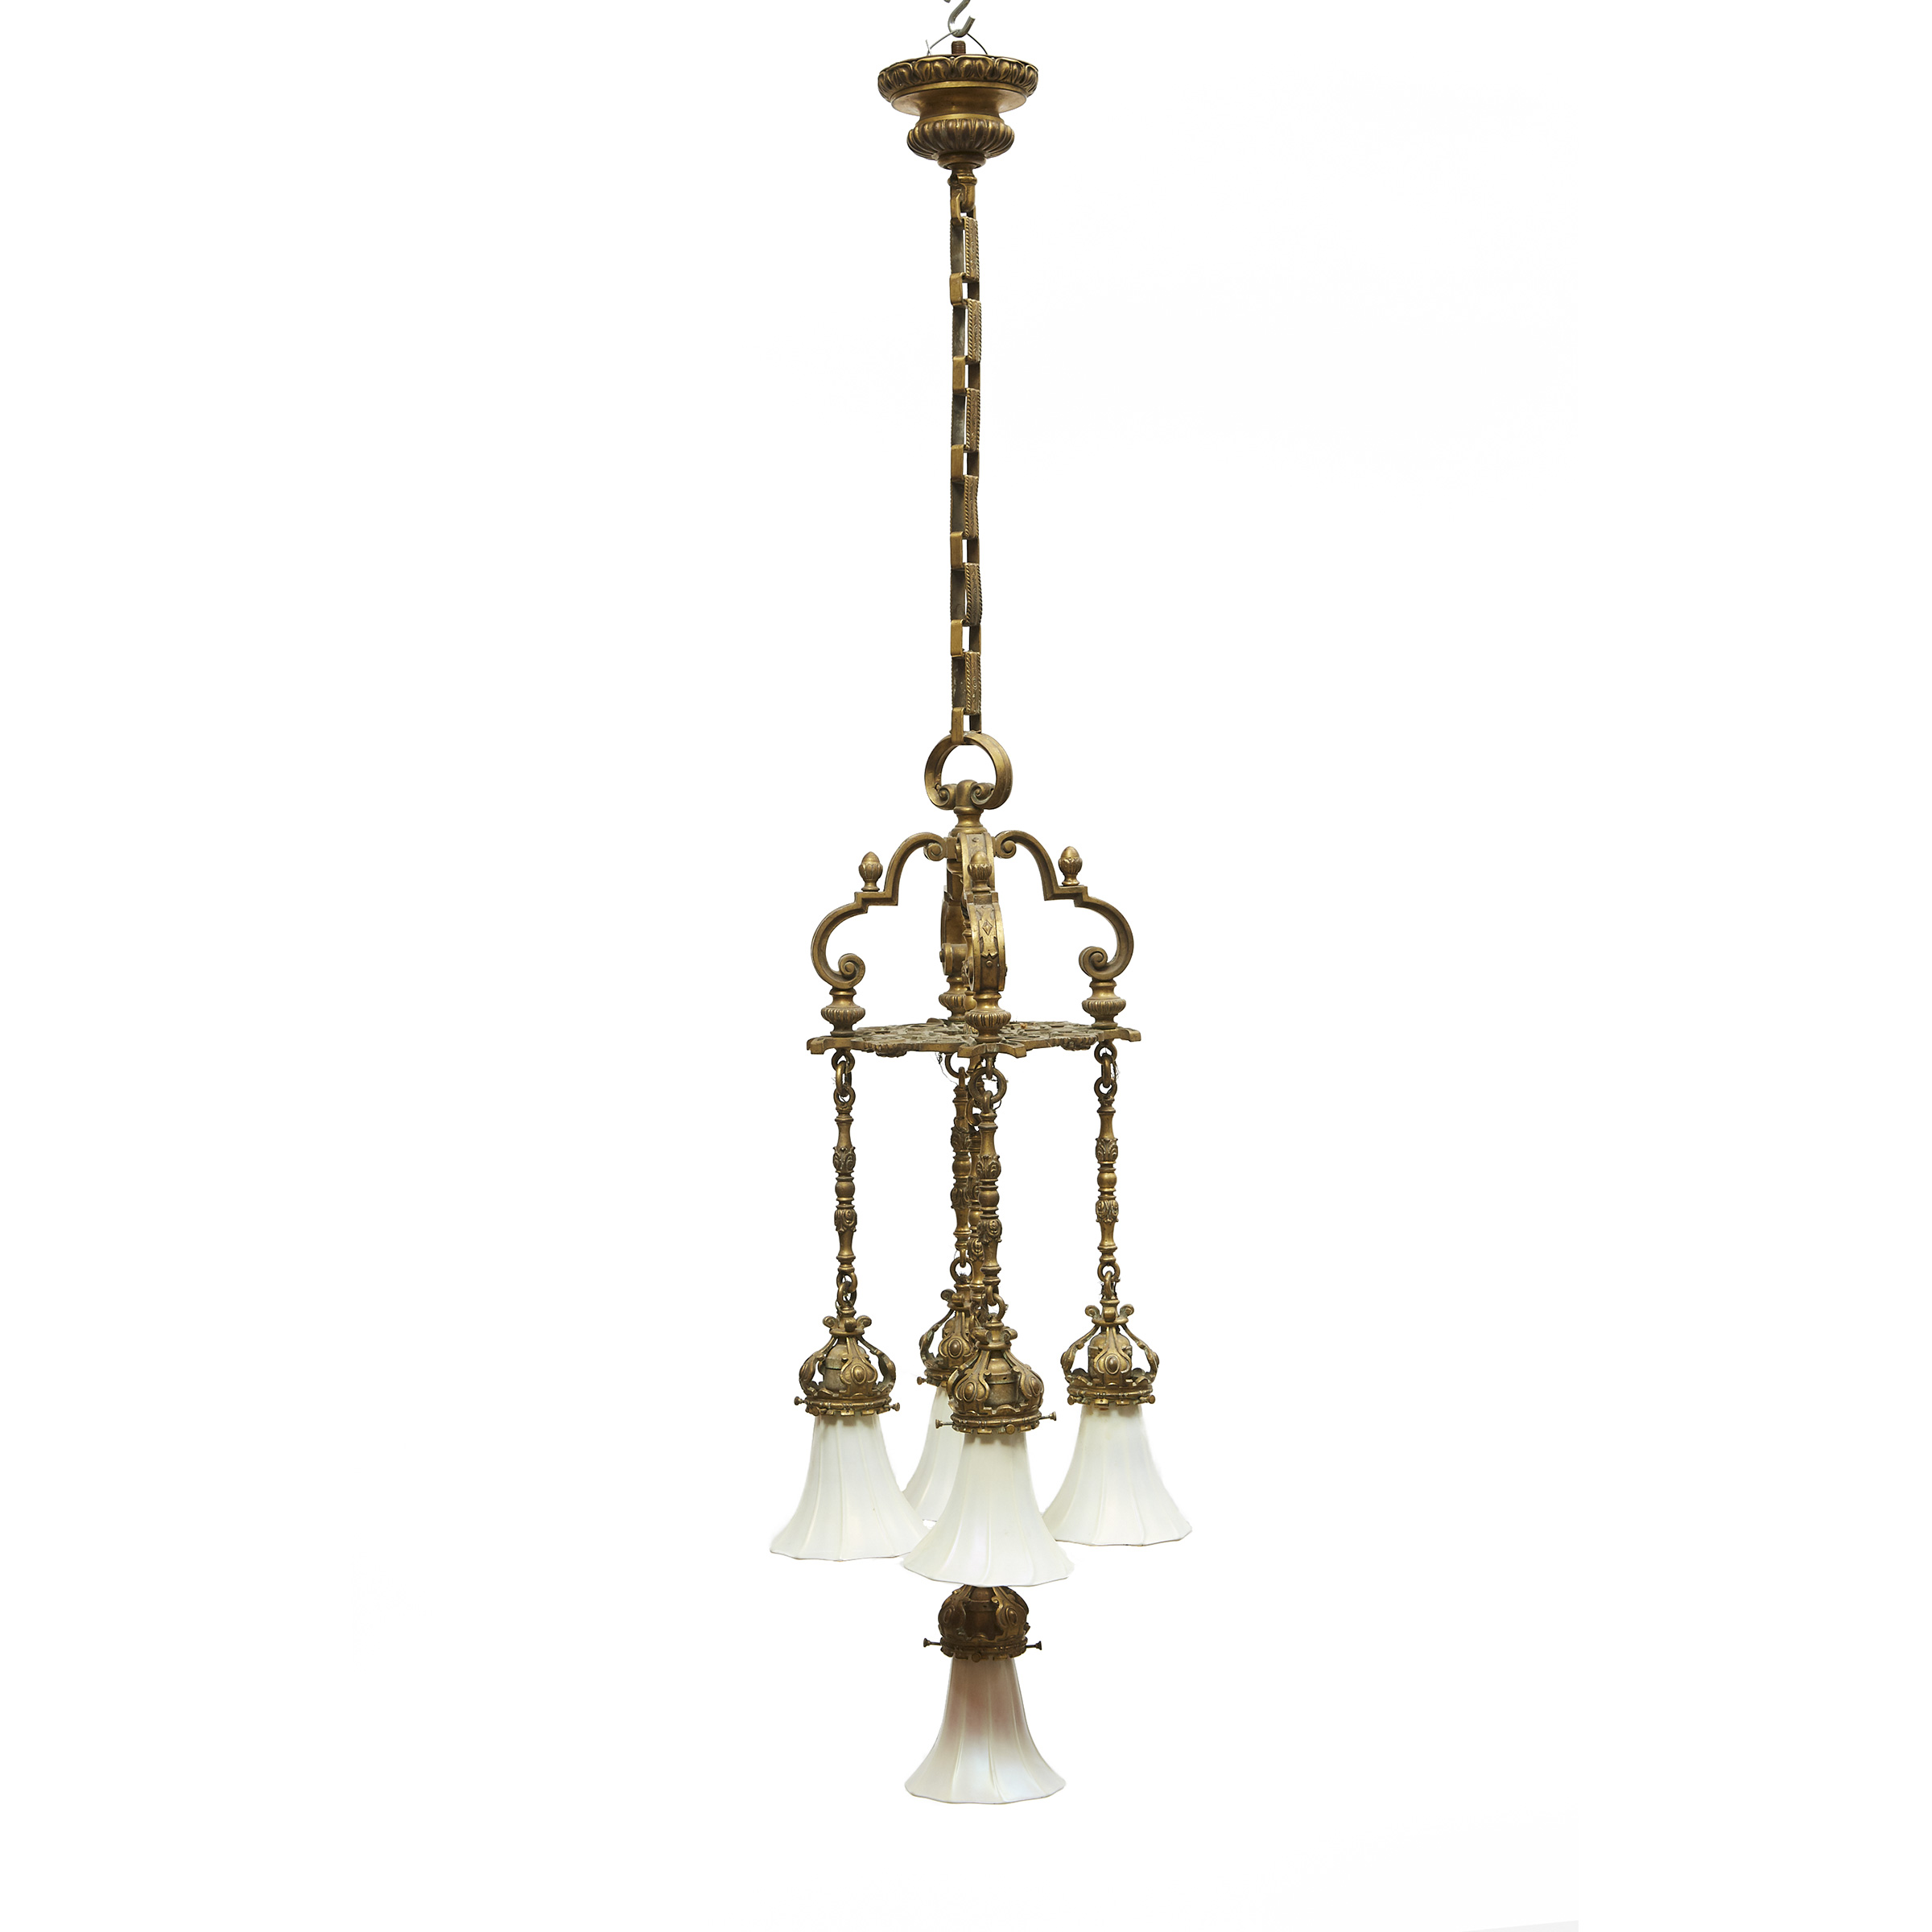 Victorian Renaissance Revival Gilt Bronze Five Light Hanging Fixture with Quezal Glass Shades, late 19th century 